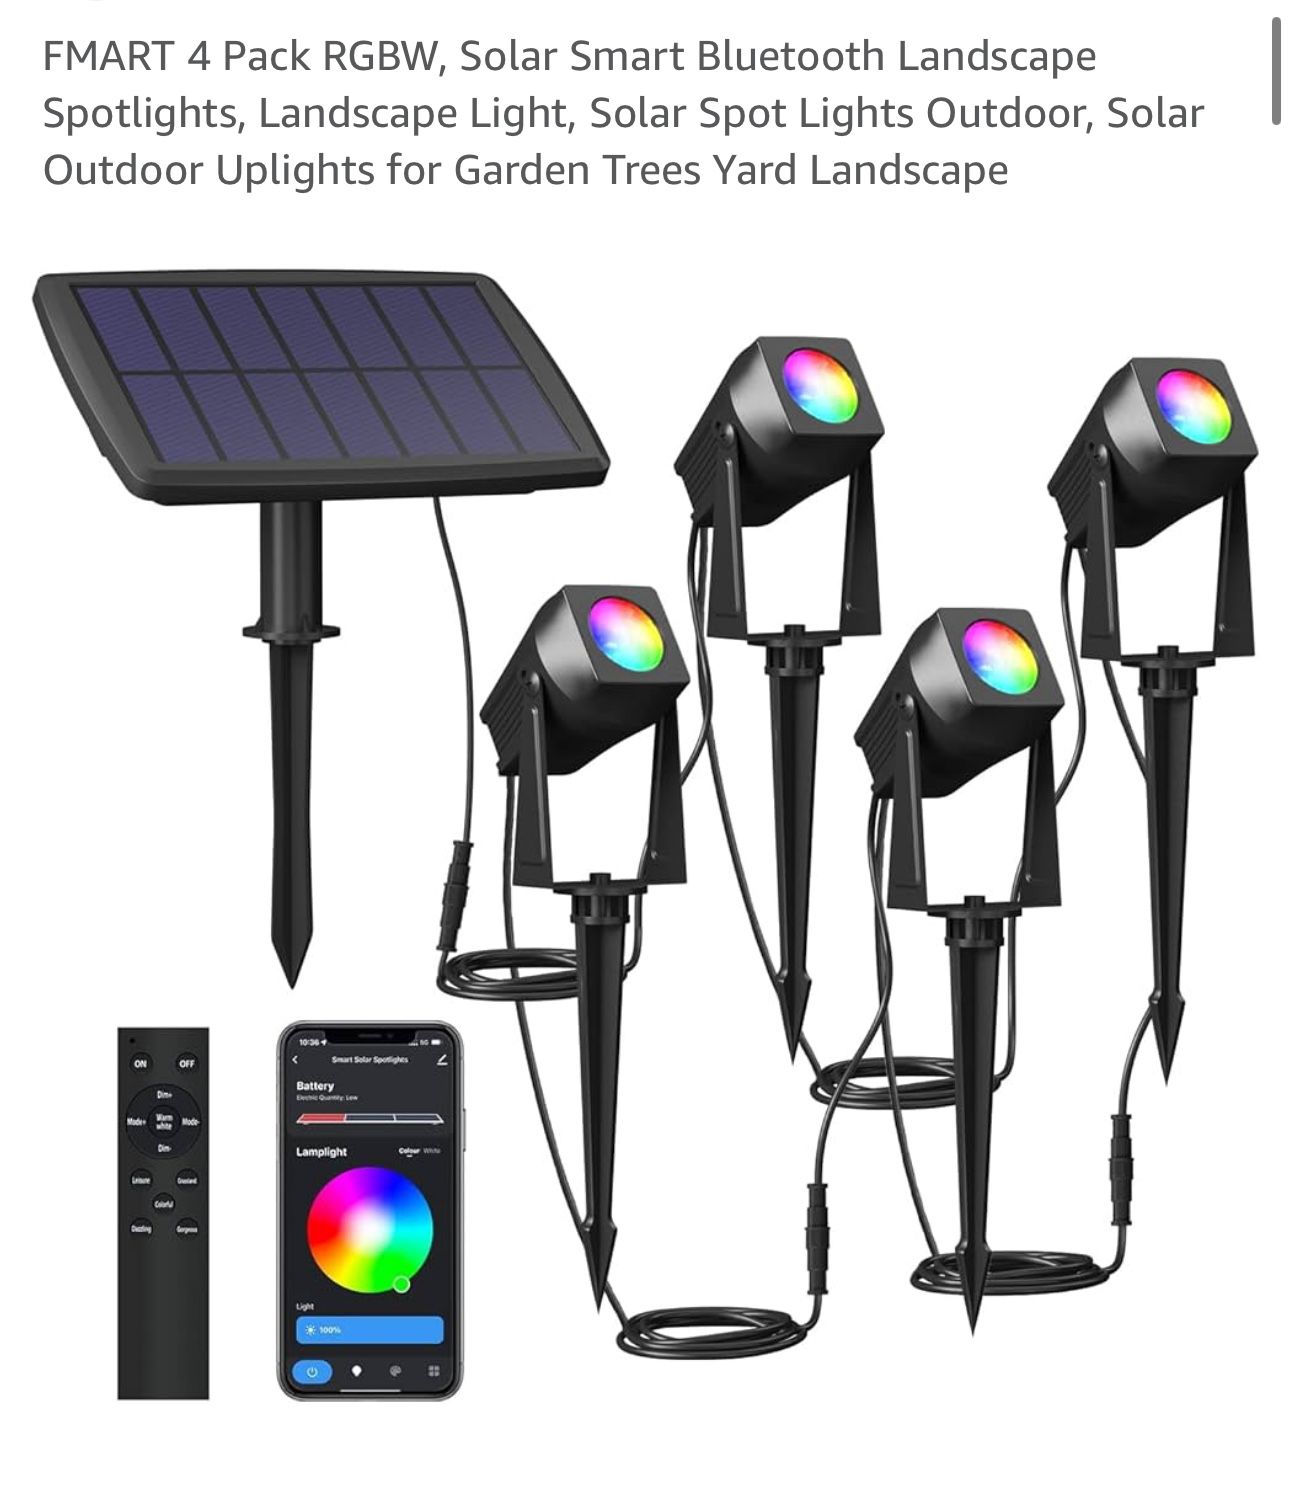 FMART SMART Solar RGB Landscape Light Pk 4